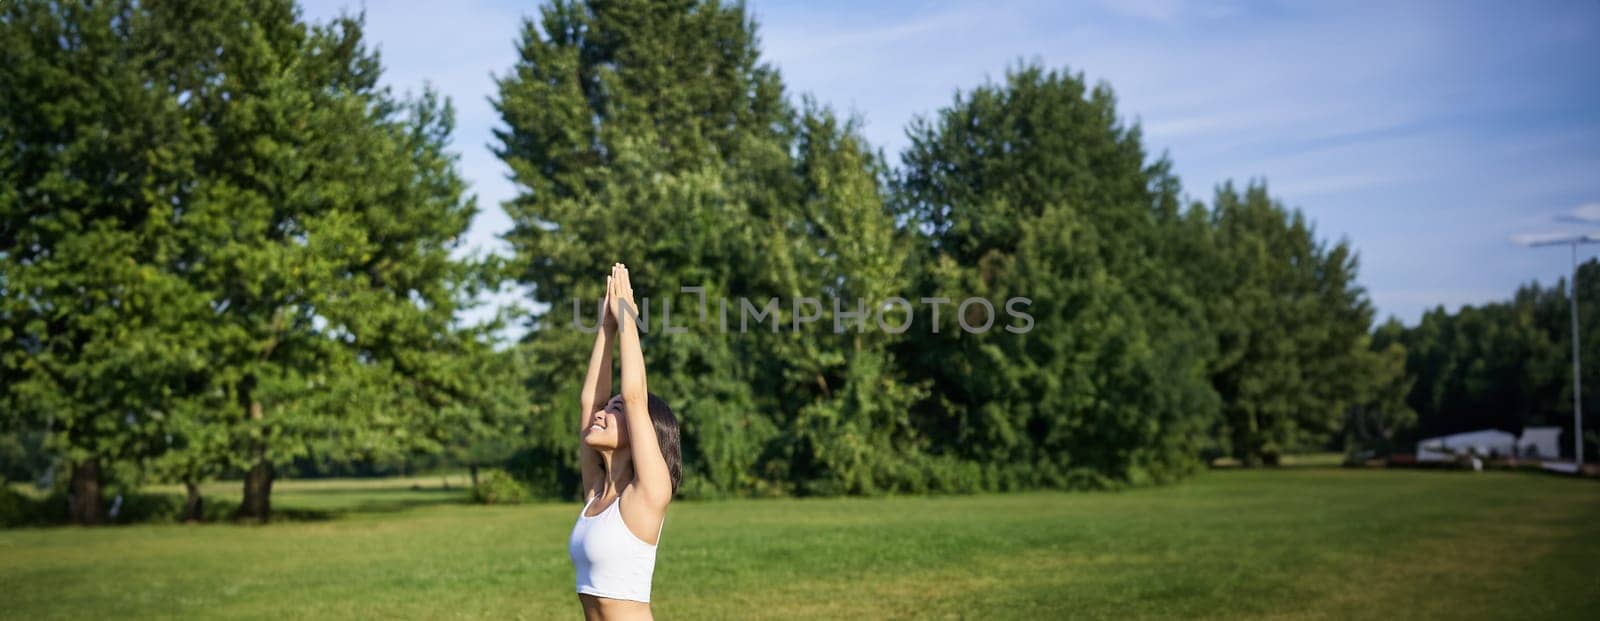 Vertical shot of smiling korean woman doing tree yoga asana, stretching on rubber mat in park, exercising.